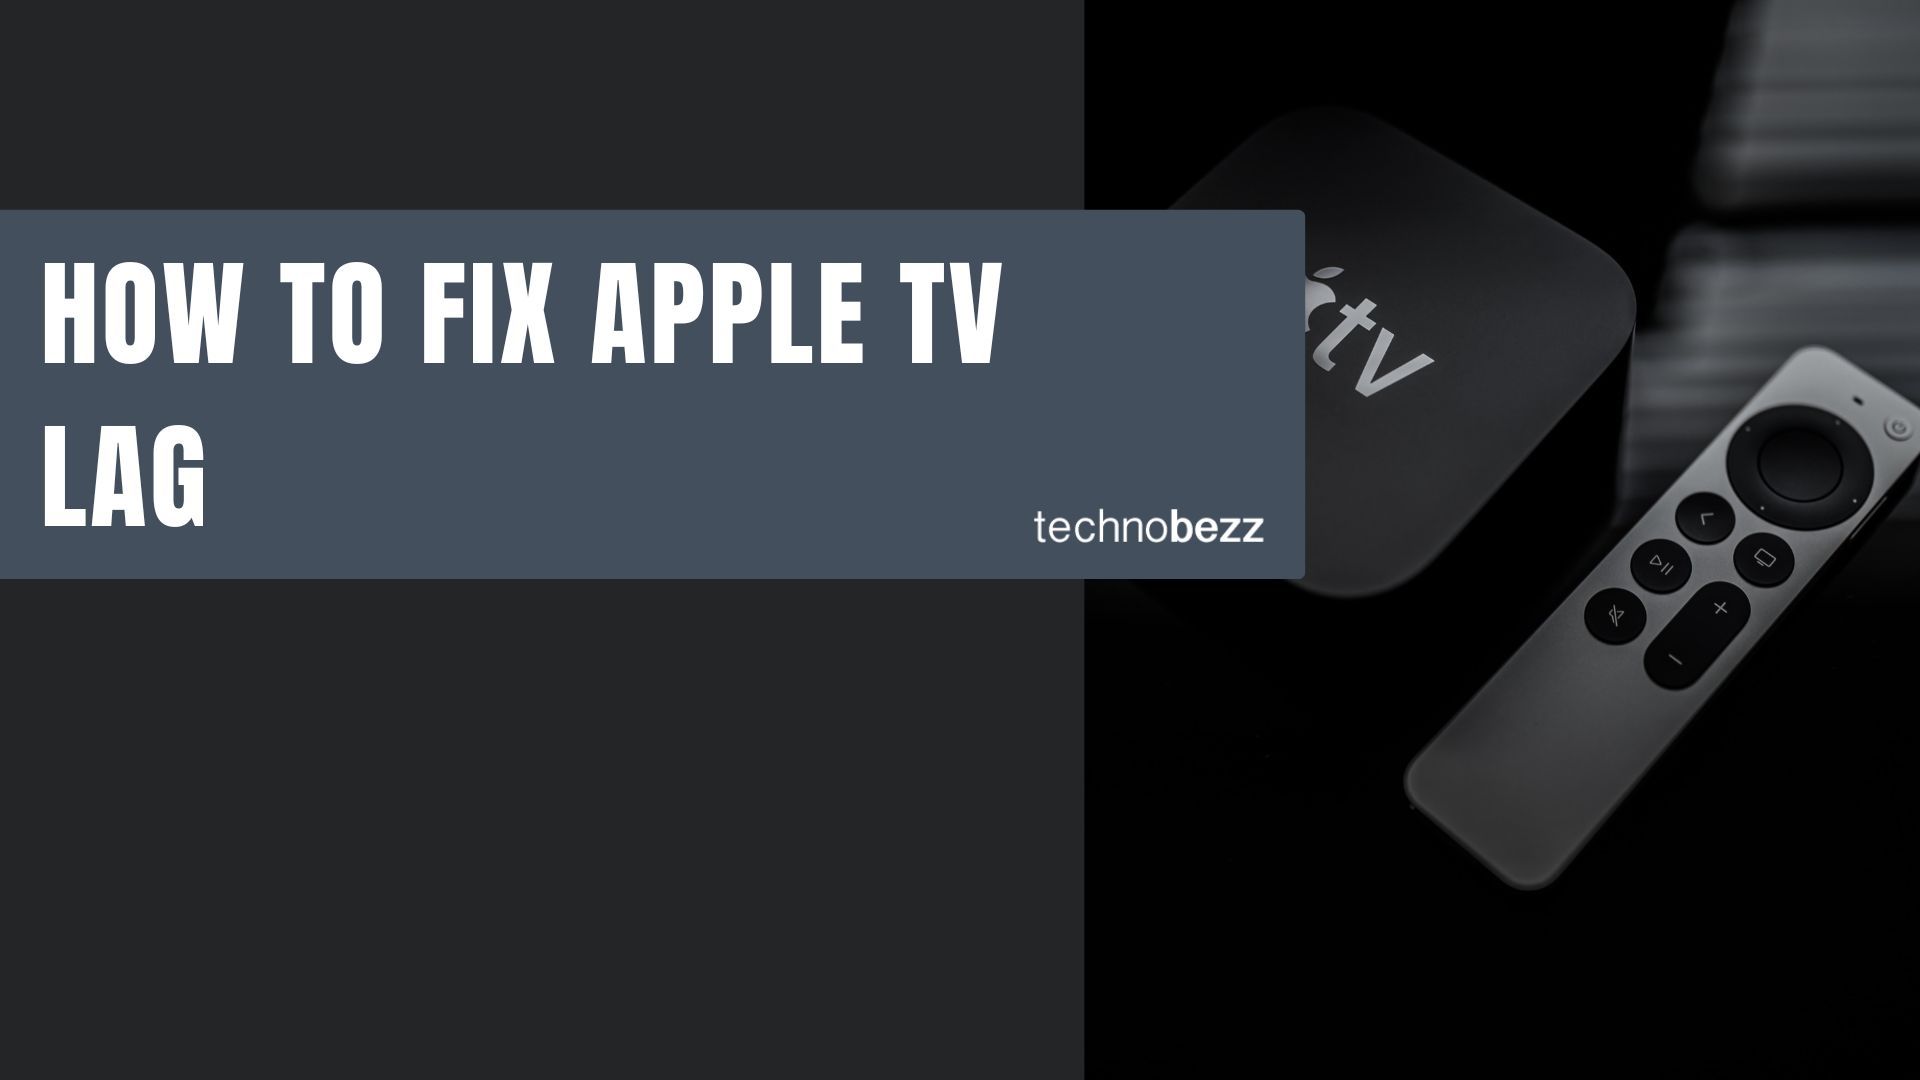 pølse samtale mount How To Fix Apple TV Lag